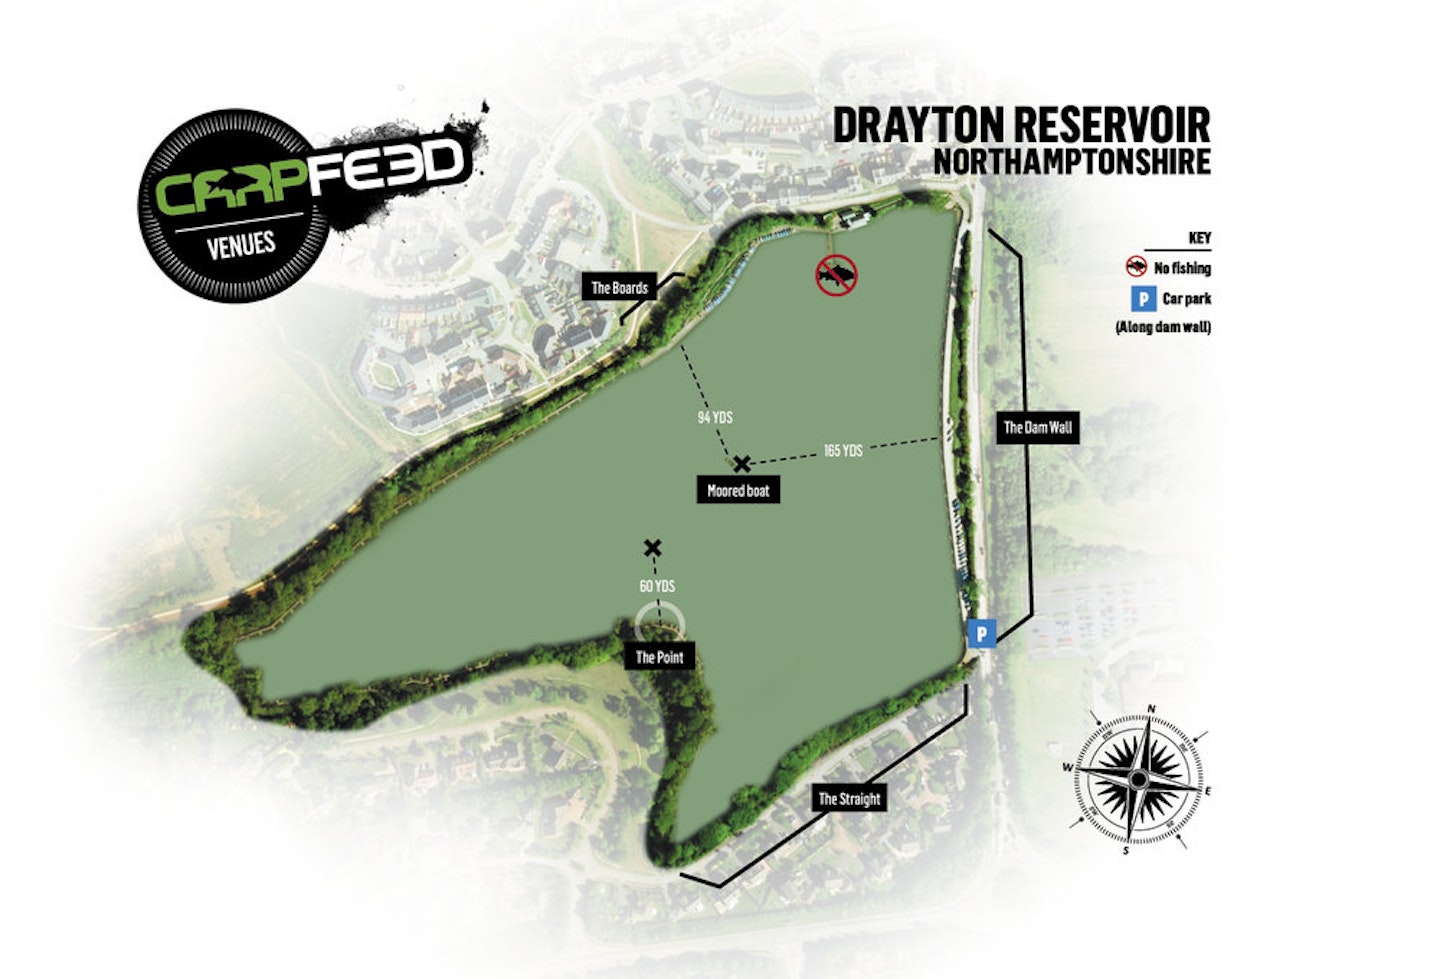 Drayton Reservoir